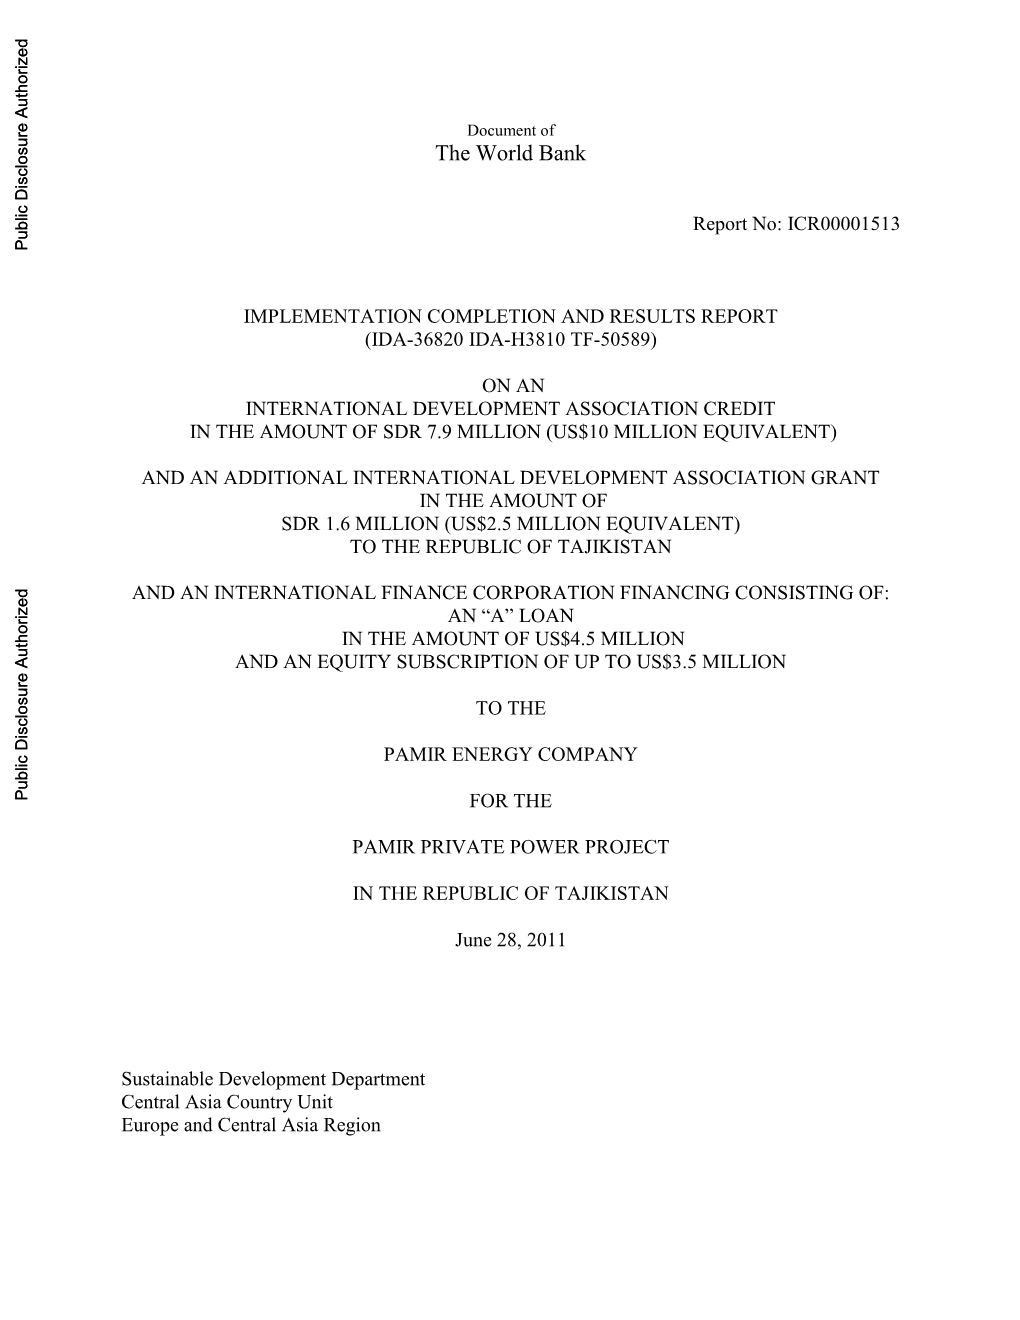 Report No: ICR00001513 Public Disclosure Authorized